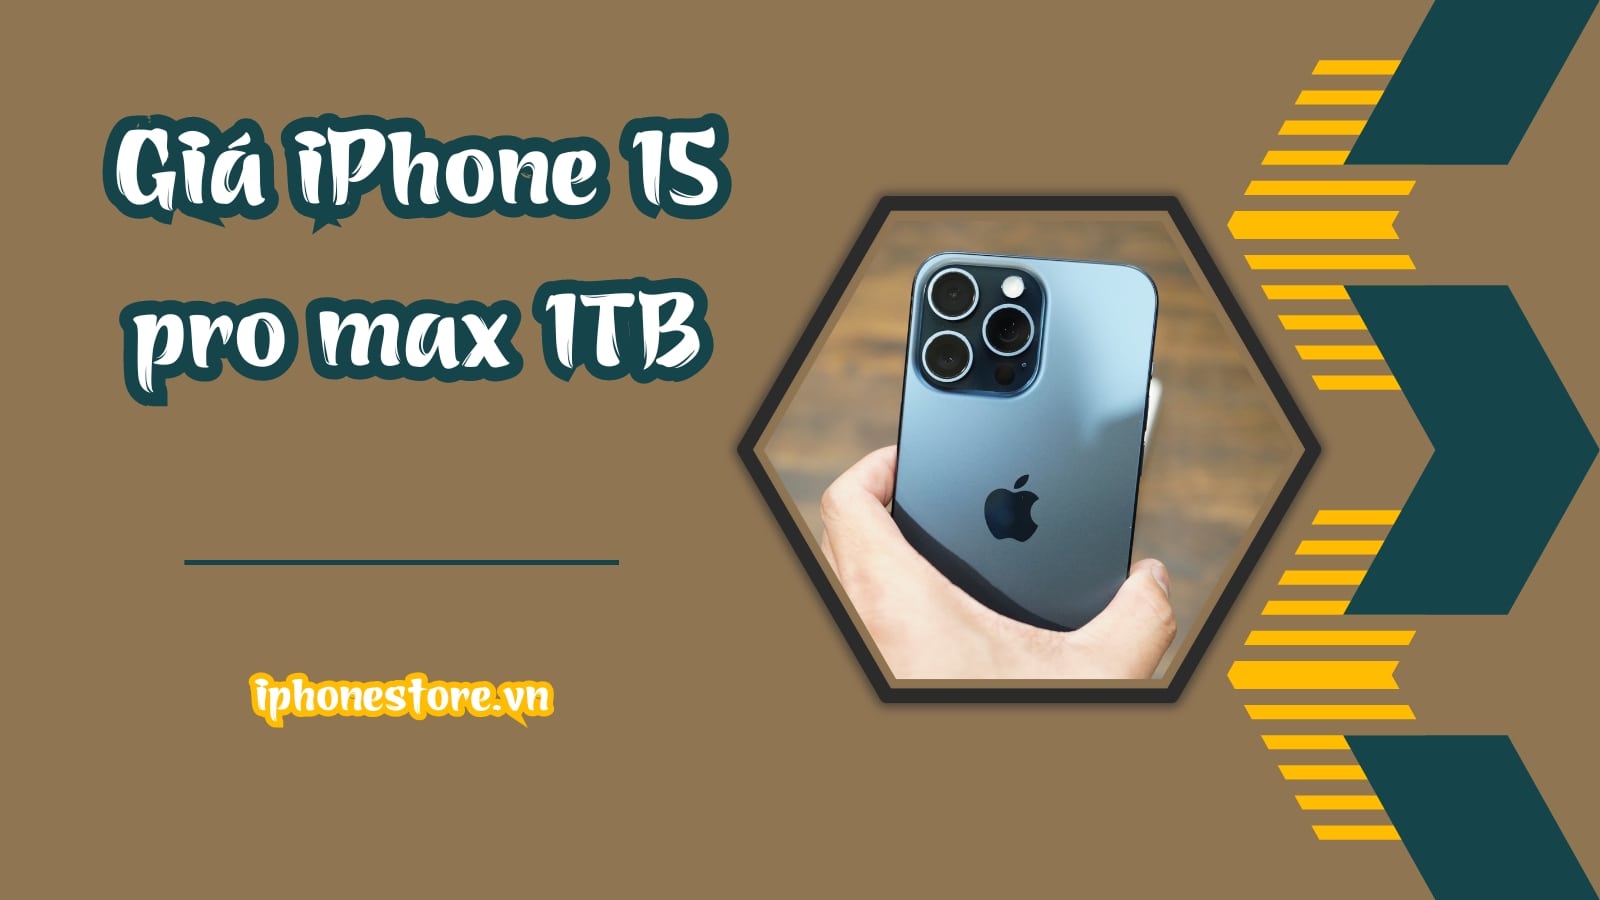 Giá iPhone 15 Pro Max 1TB